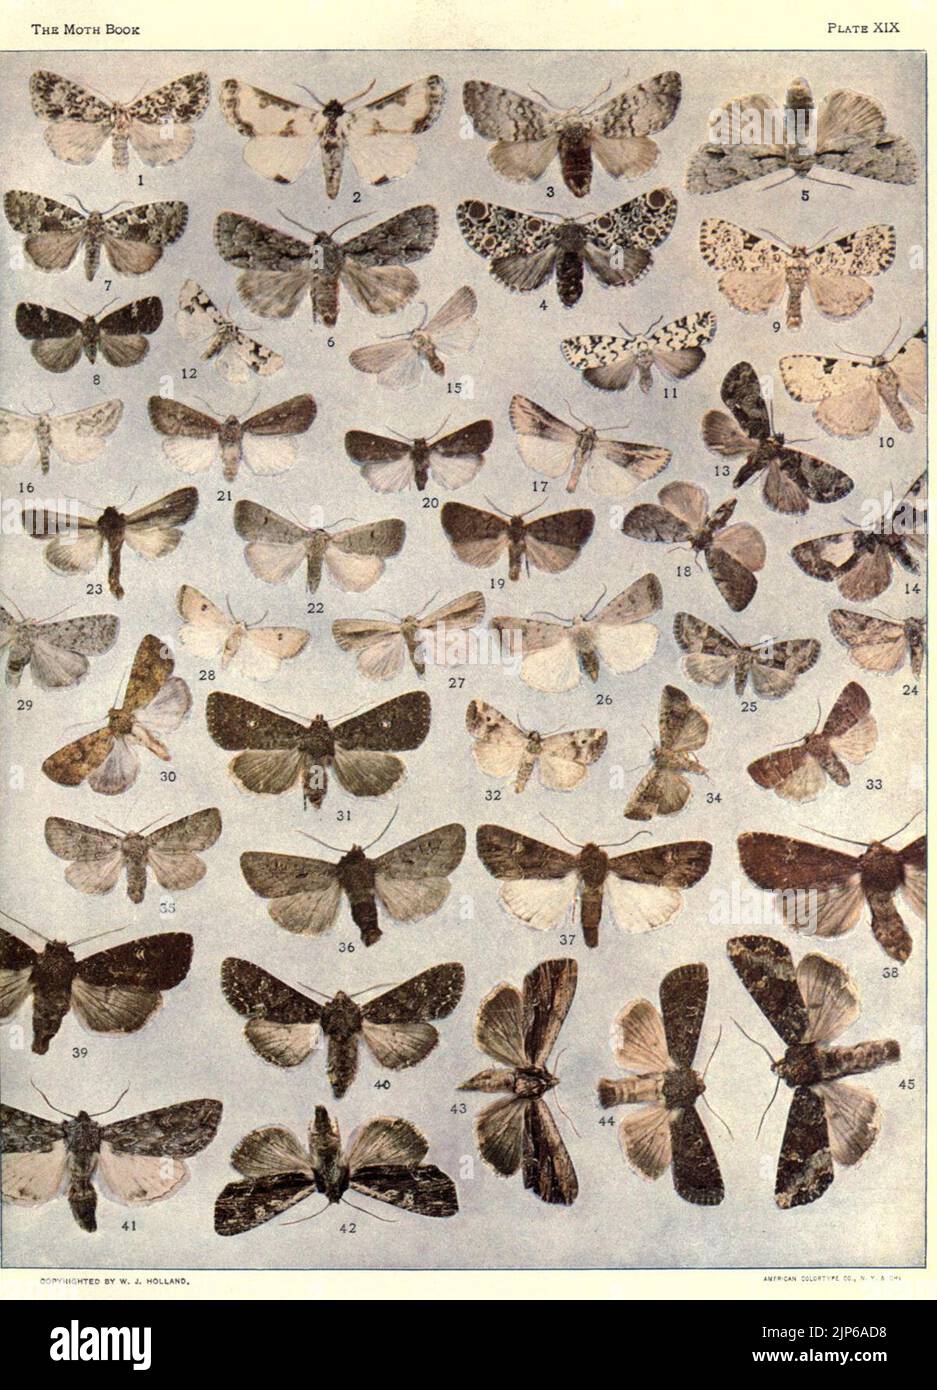 The moth book (Plate XIX) Stock Photo